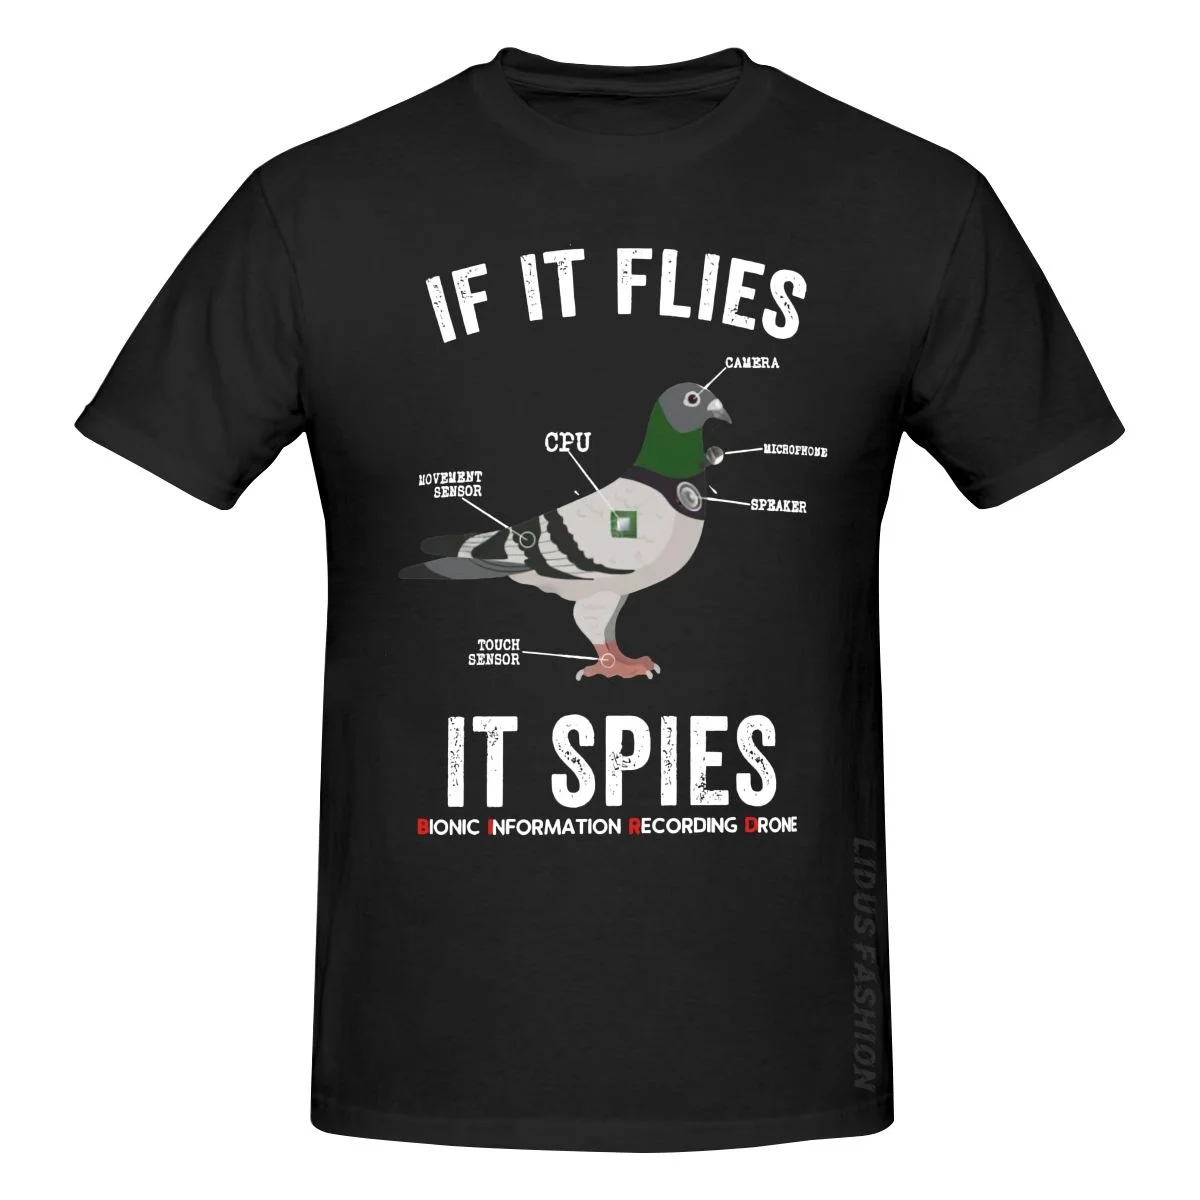 

Футболка с теории заговора, футболка с коротким рукавом с надписью «If It Spies»